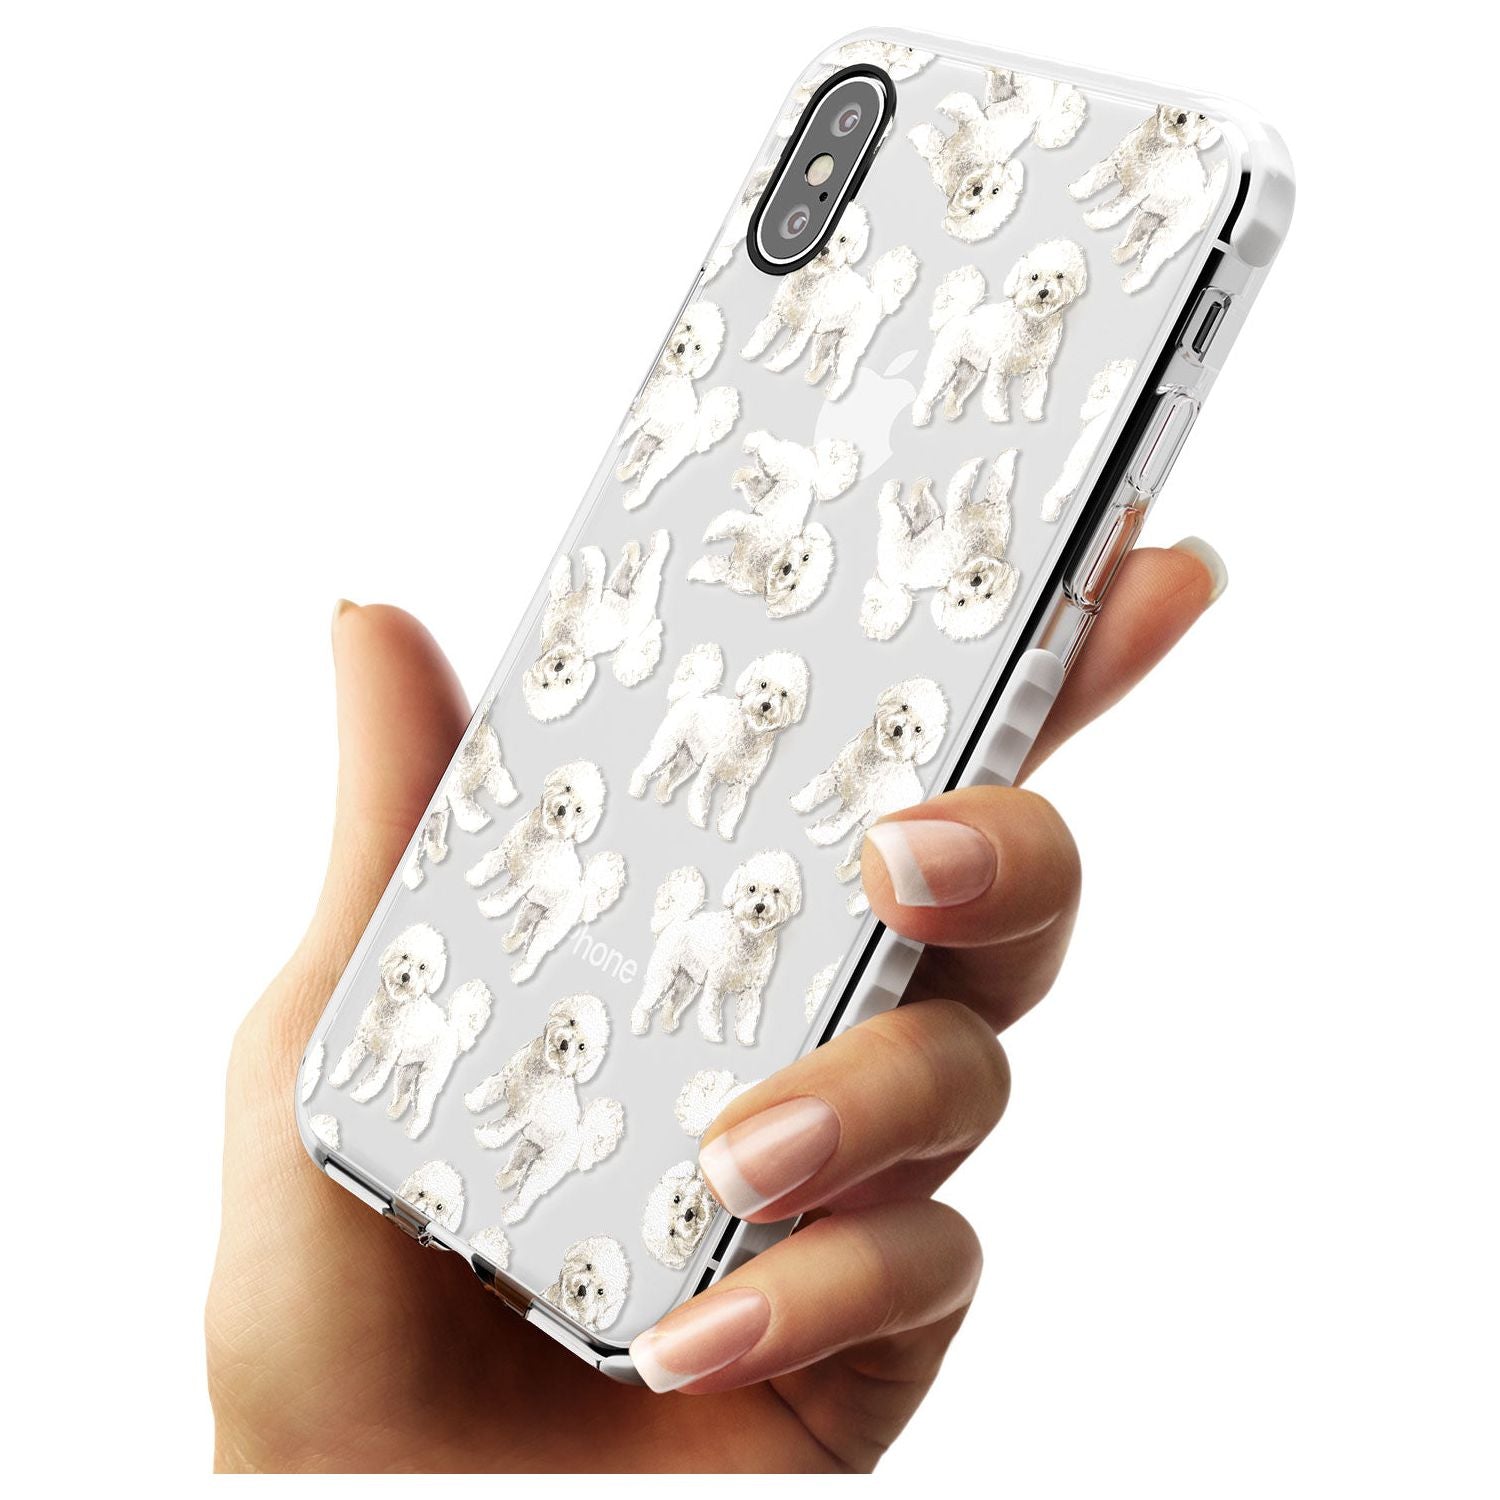 Bichon Frise Watercolour Dog Pattern Impact Phone Case for iPhone X XS Max XR